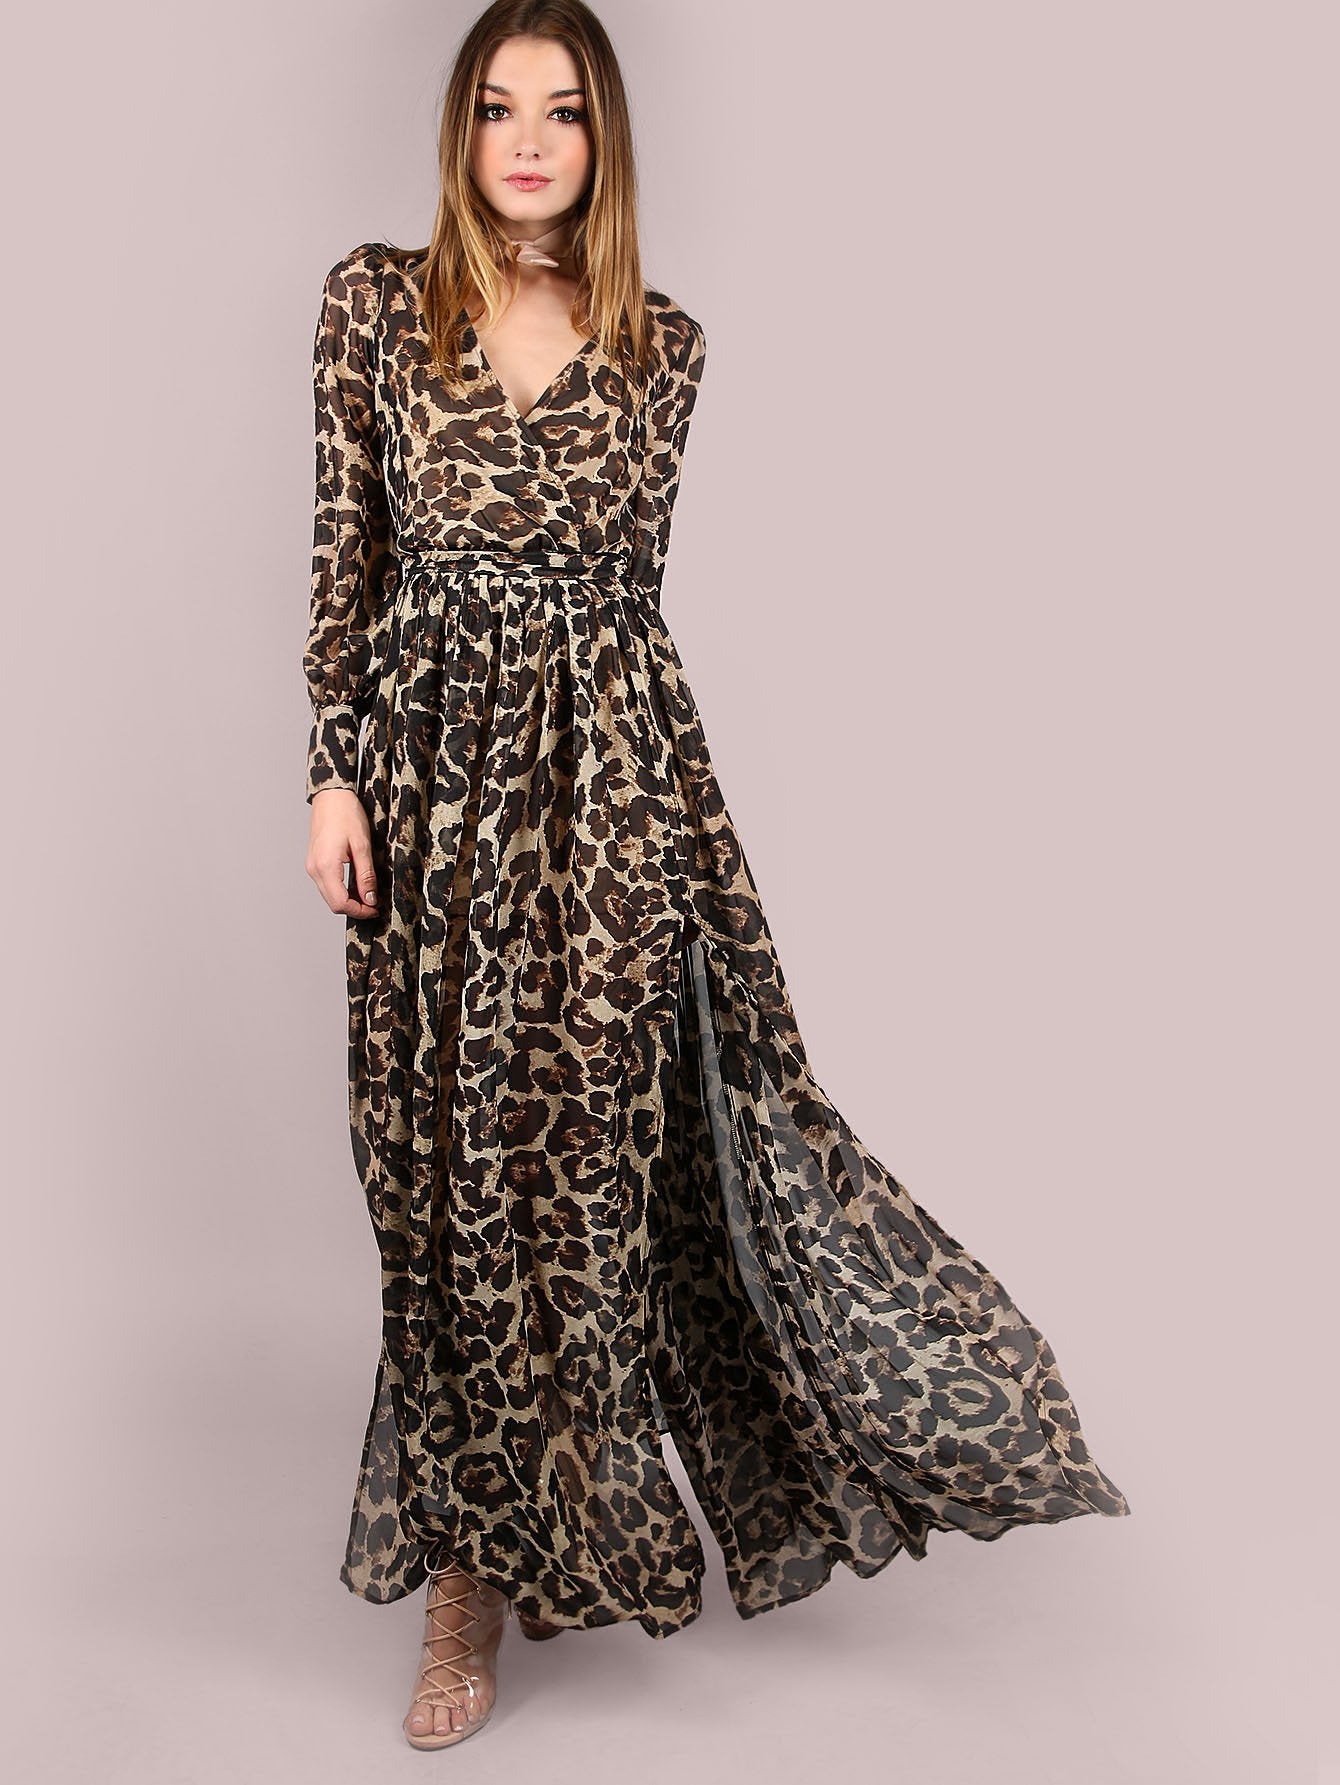 Leopard Print Maxi Dress - Boho Buys